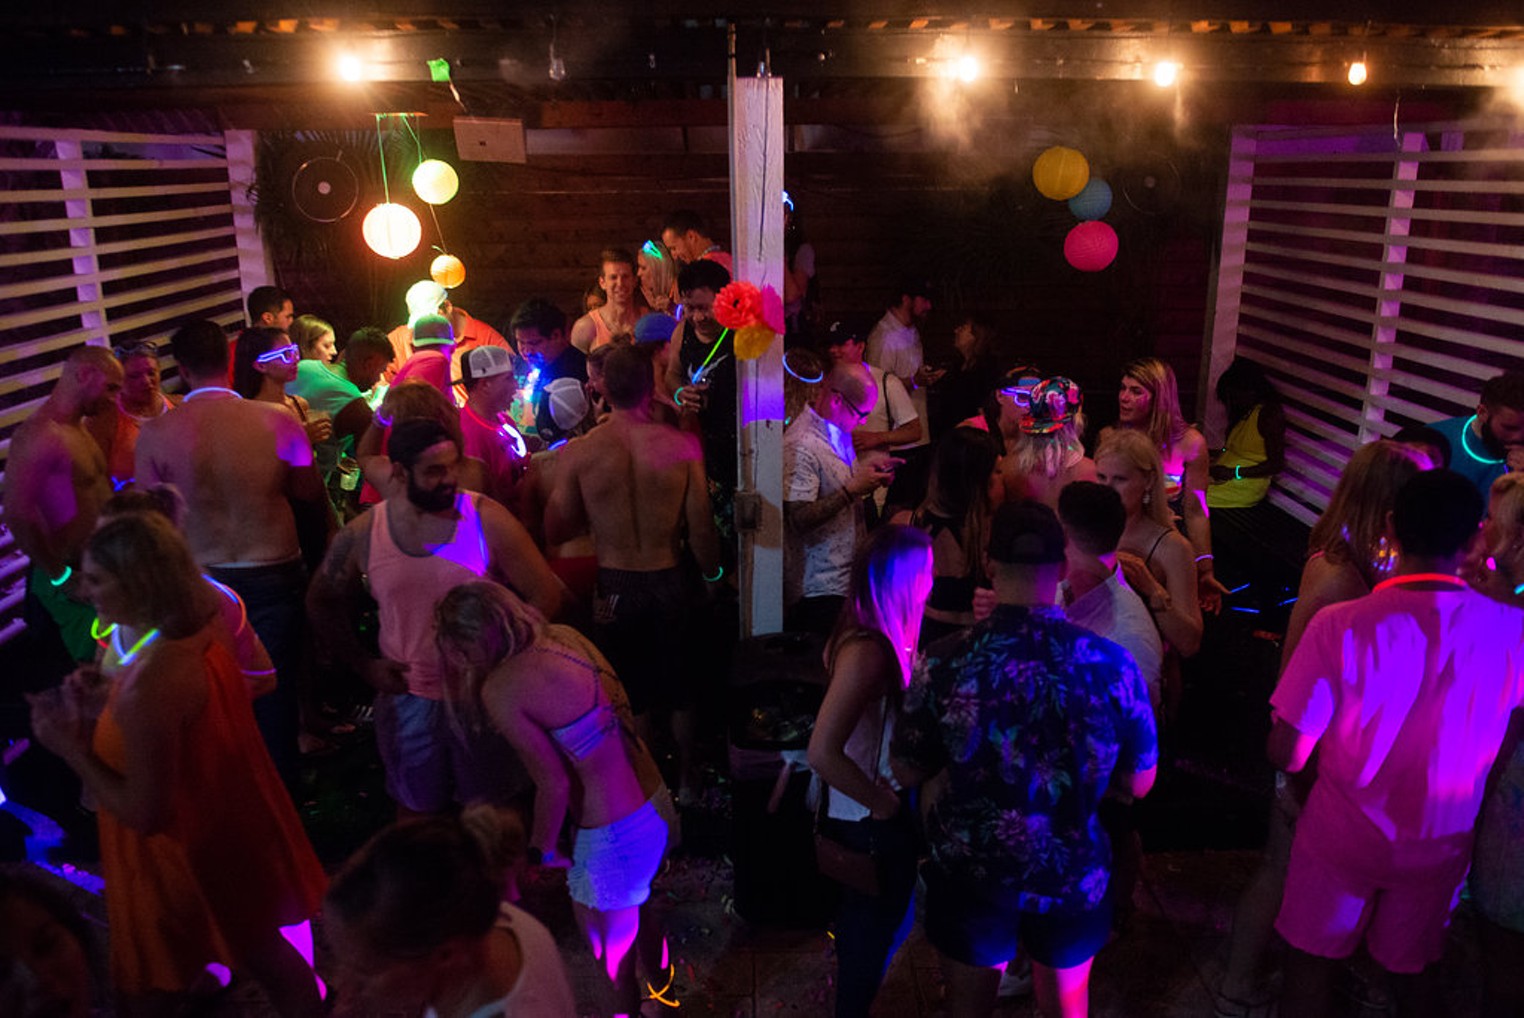 Scenes from the Noche de Neon Pool Party at Sisu - D Magazine